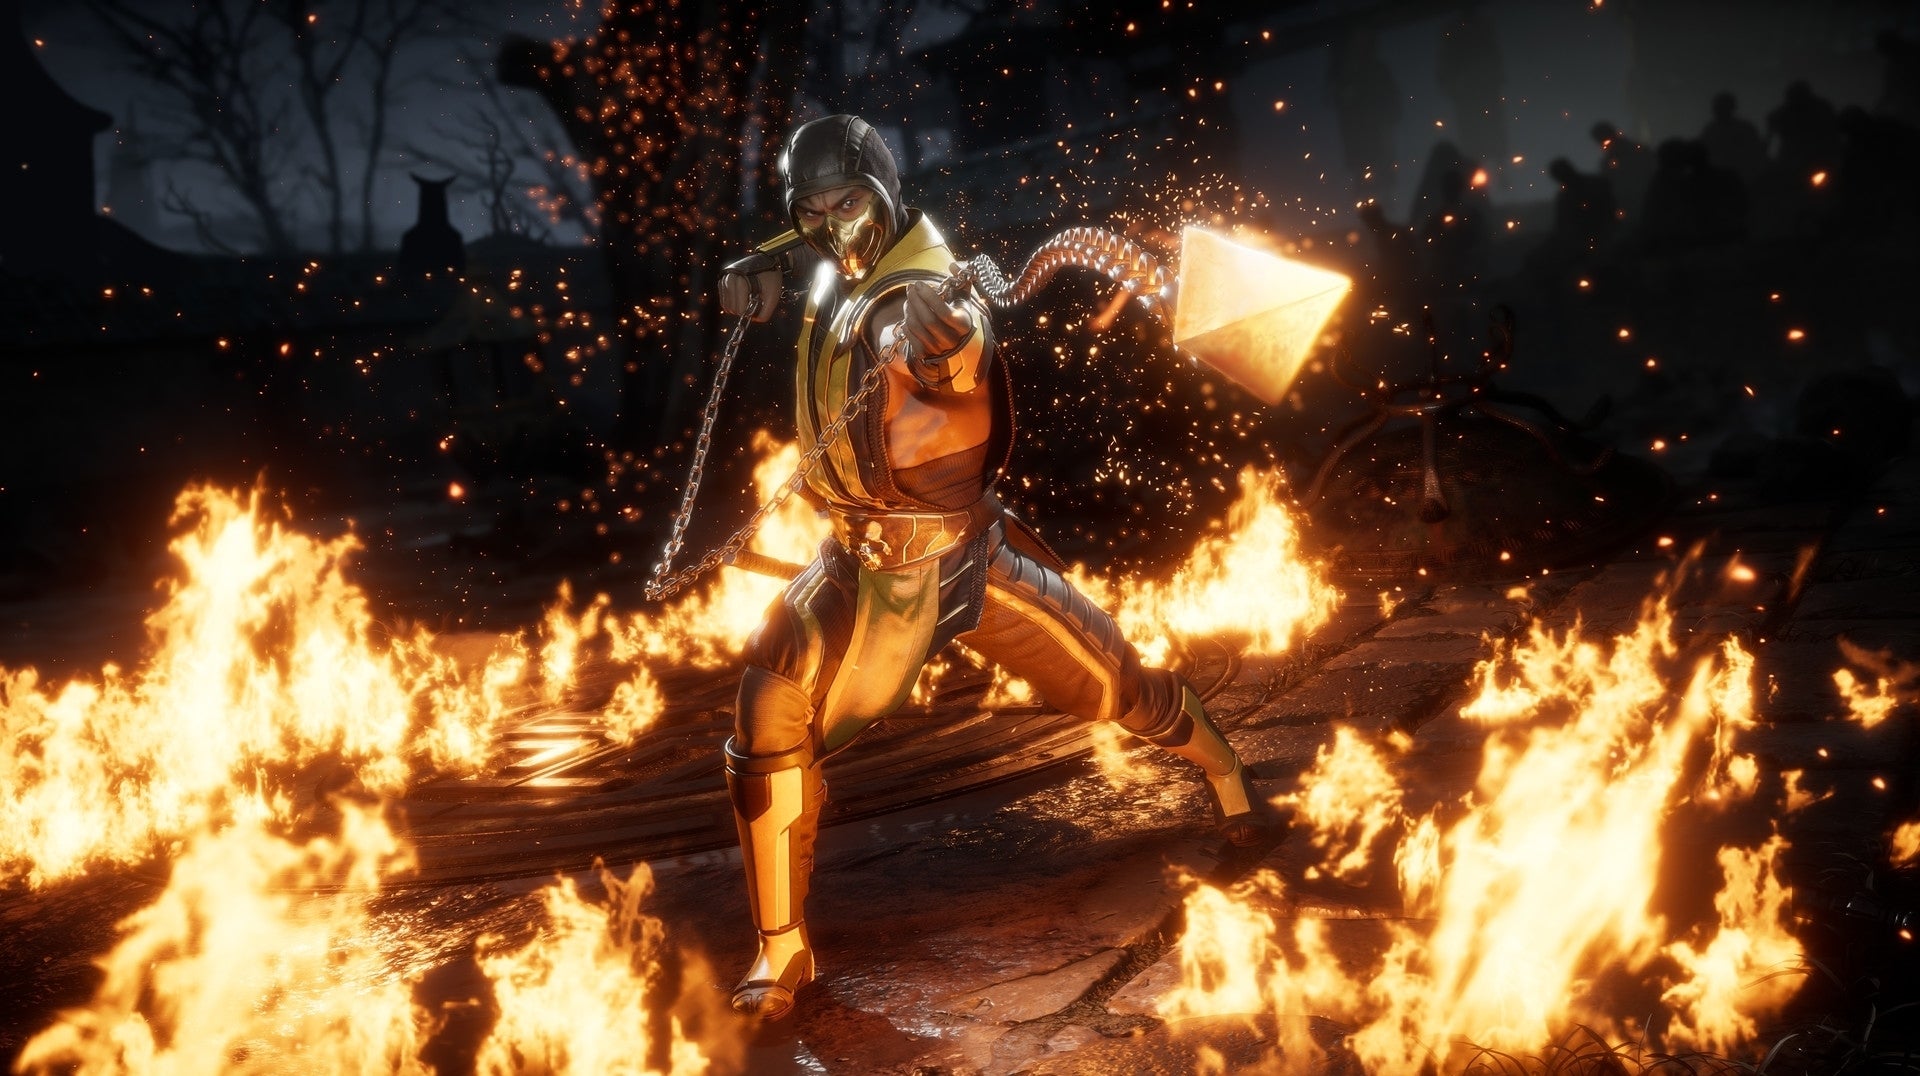 Image for No more Mortal Kombat 11 DLC, NetherRealm confirms